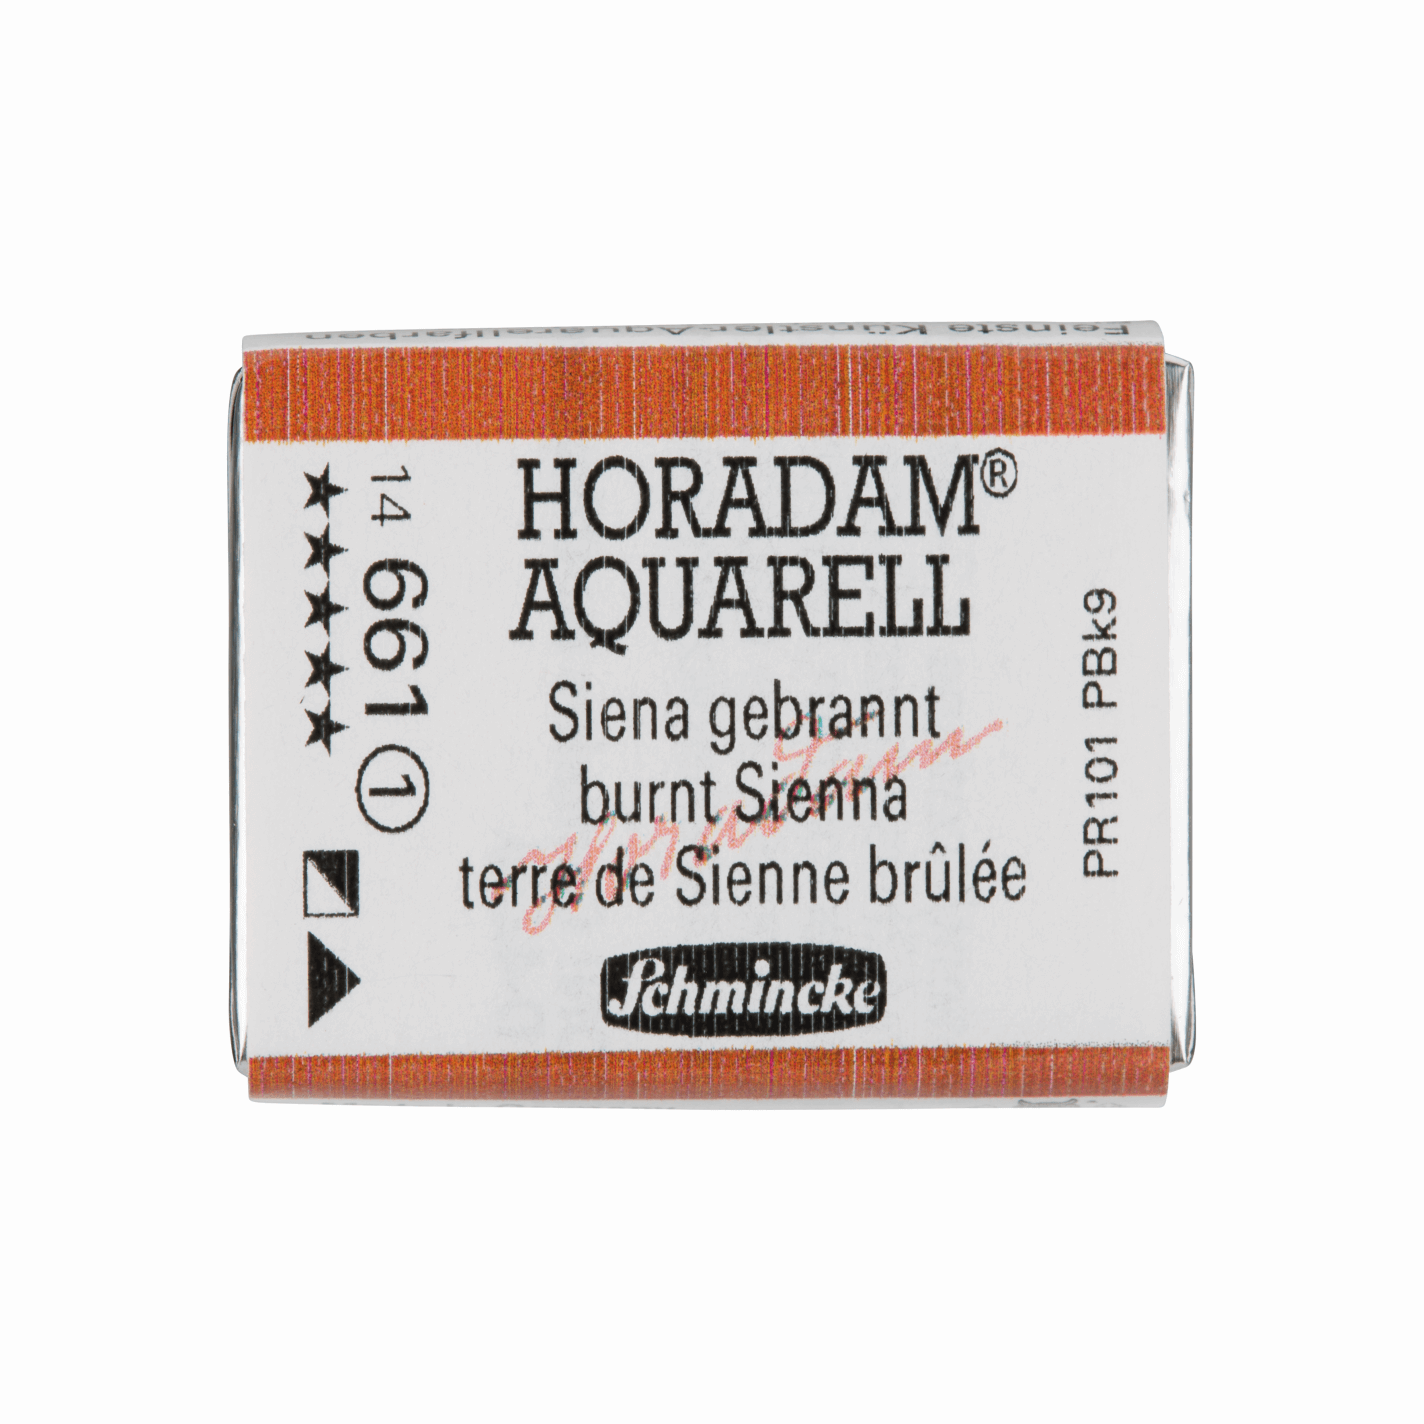 Schmincke Horadam Aquarell pans 1/1 pan Burnt Sienna